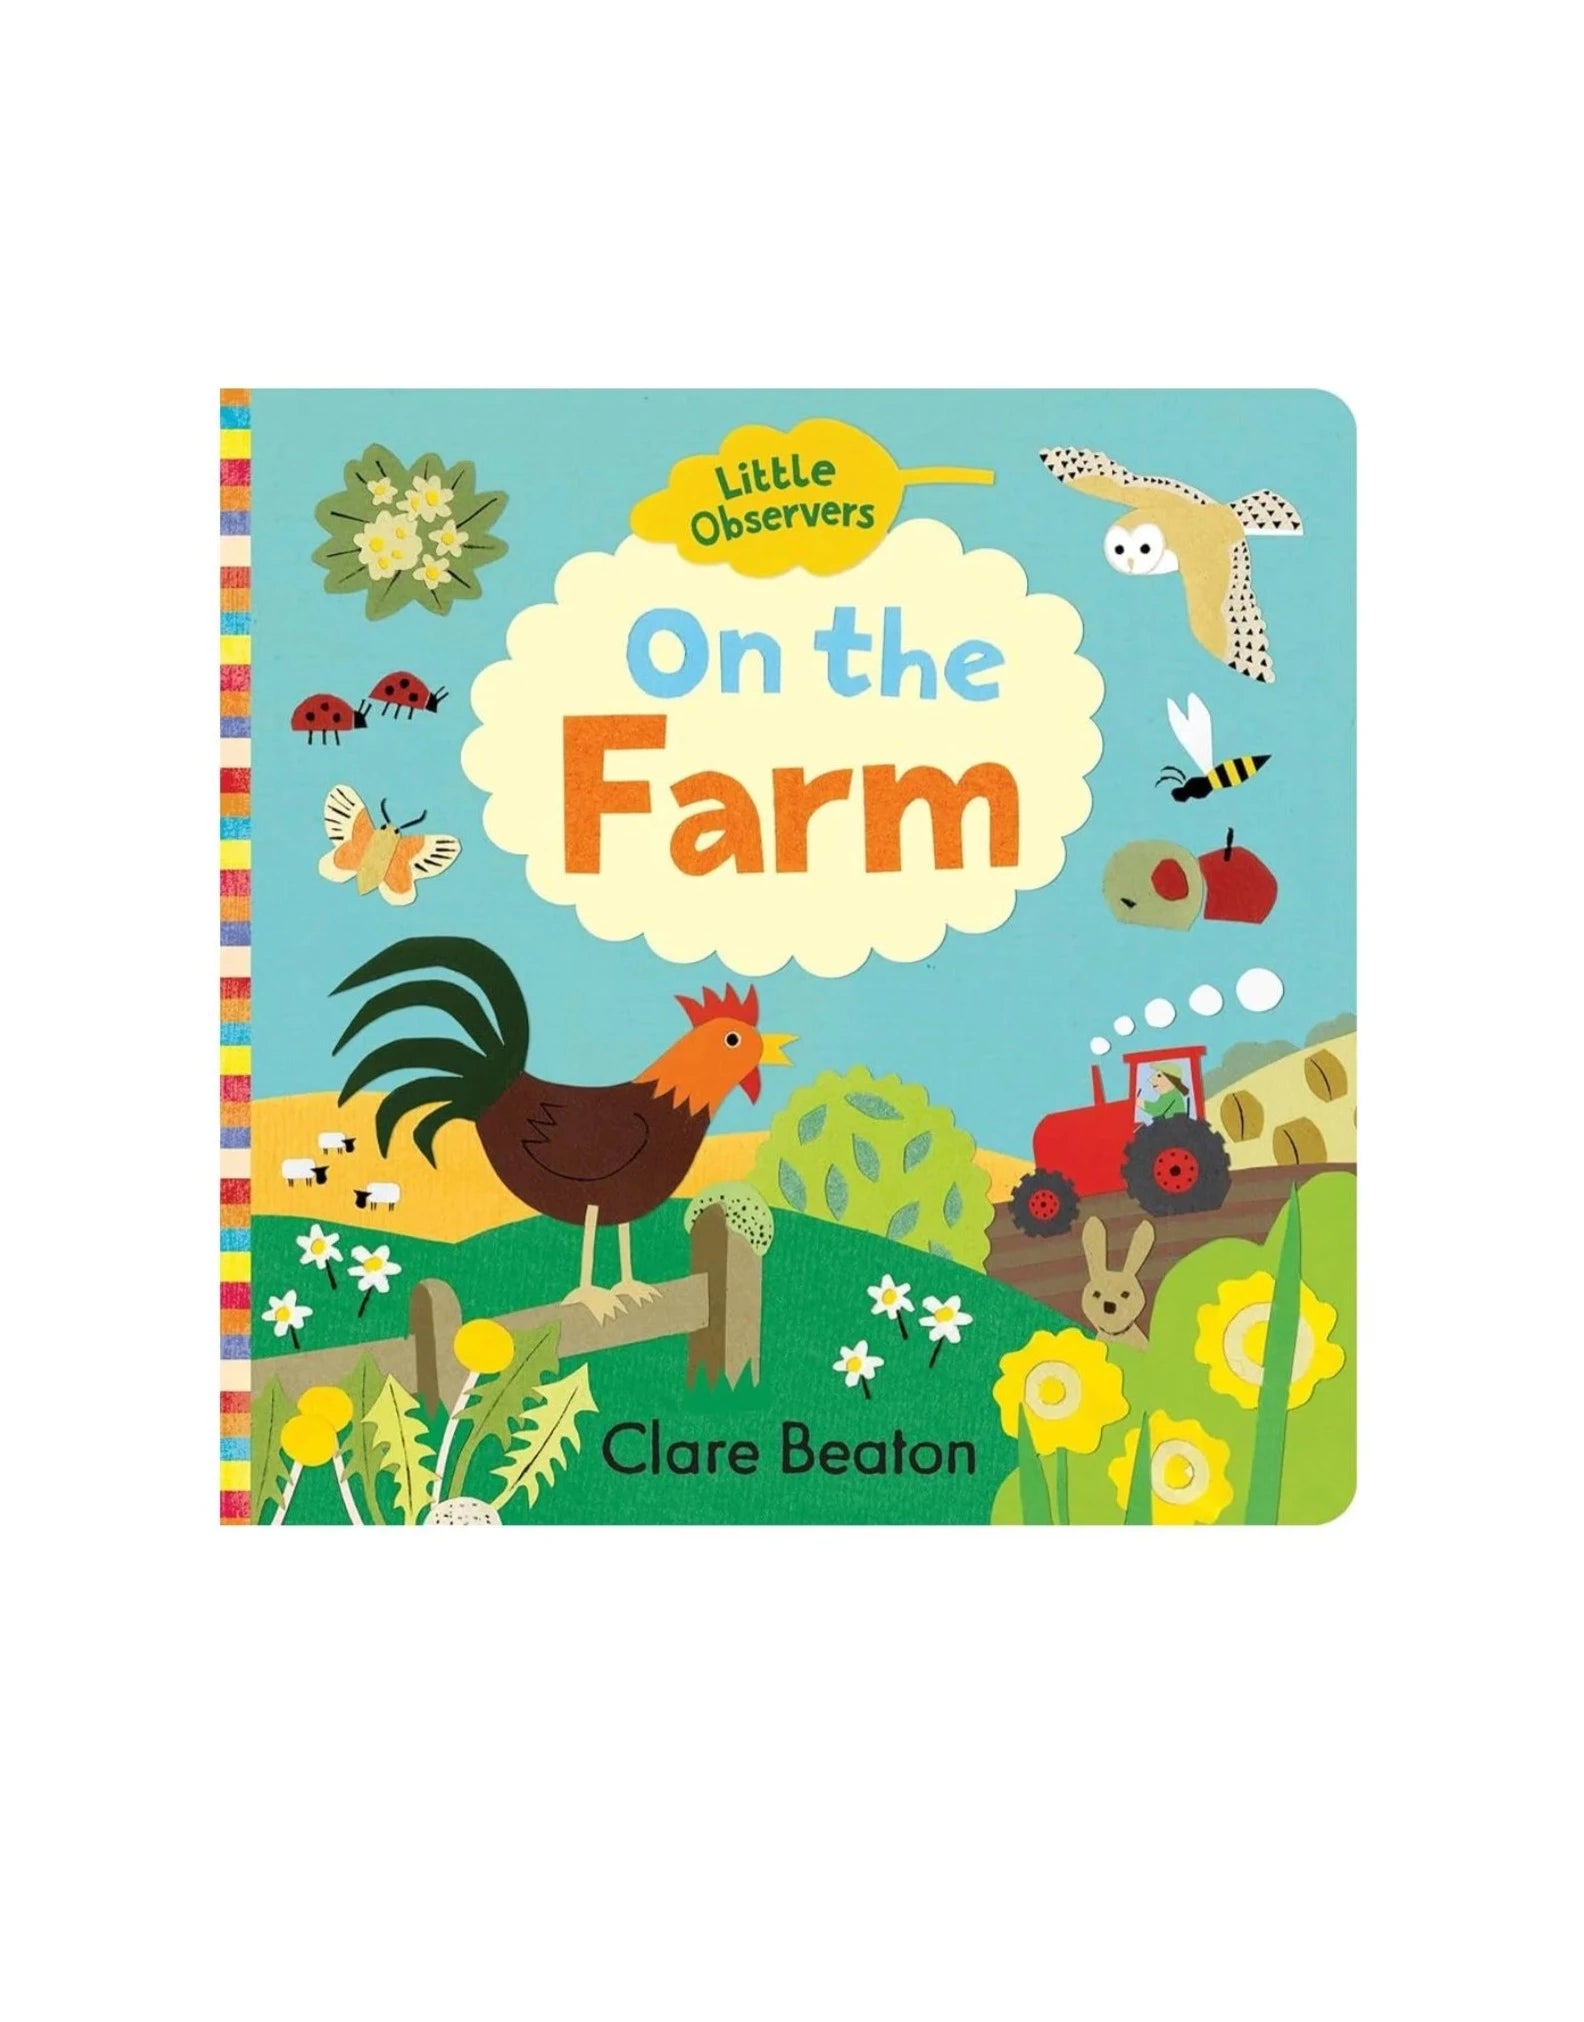 on the farm children's book